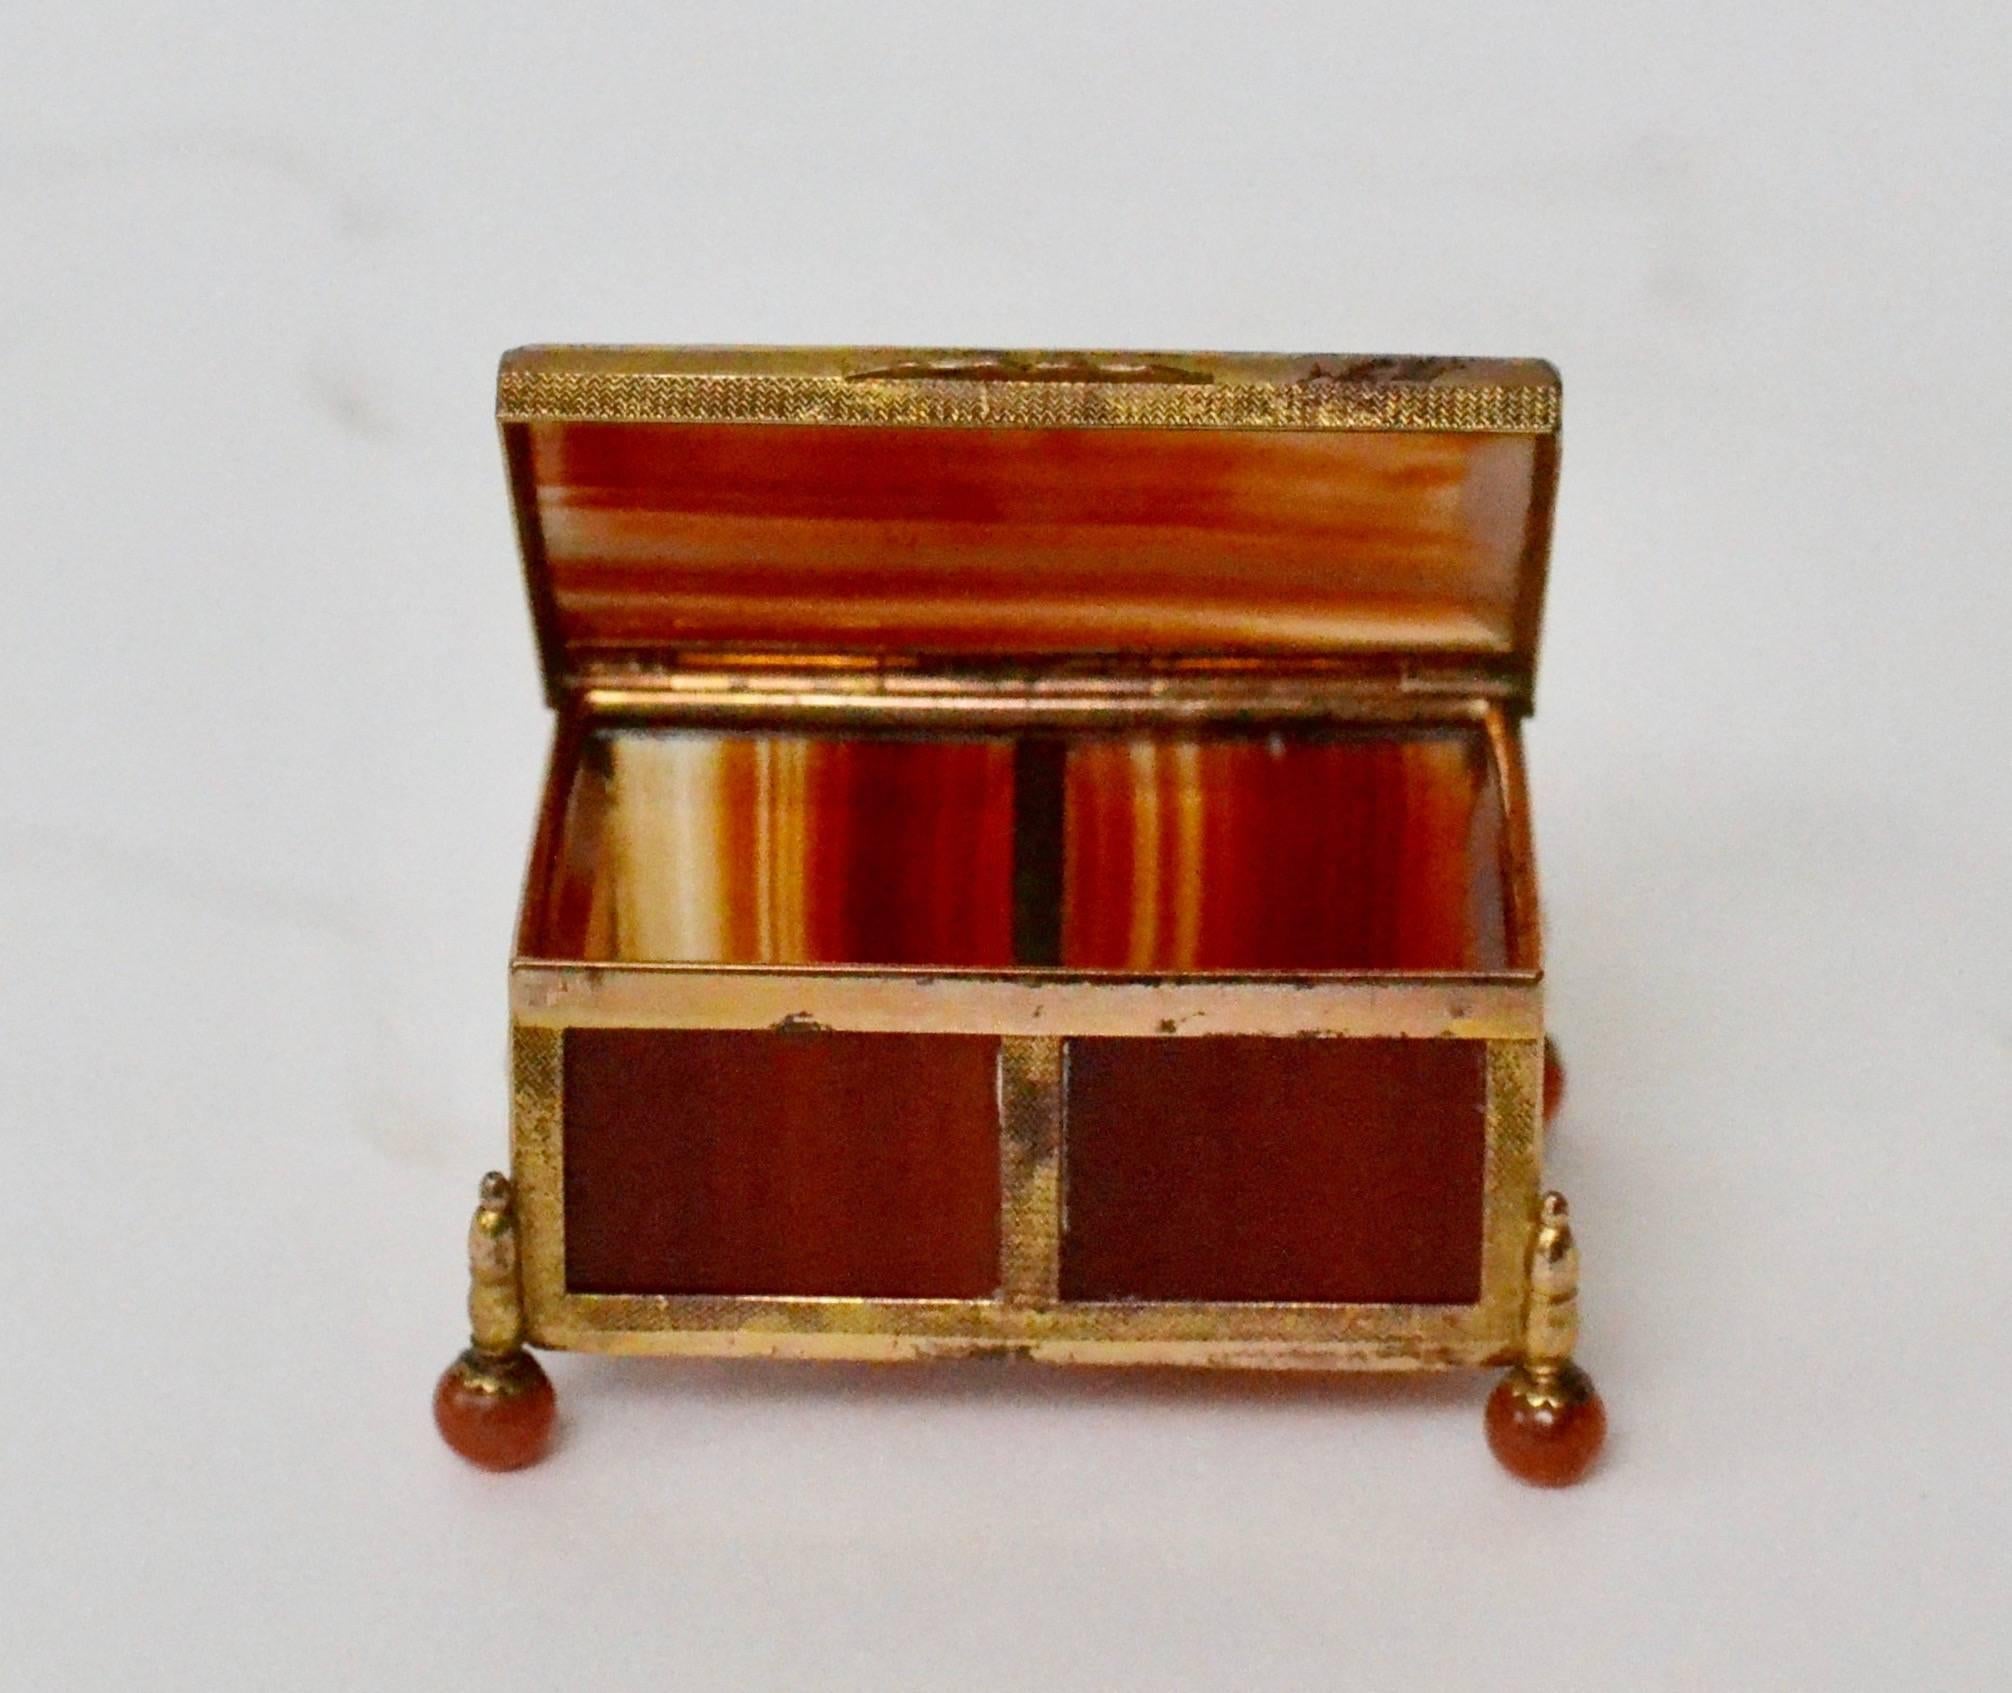 A small 19th century gilt bronze and agate box, 19th century.